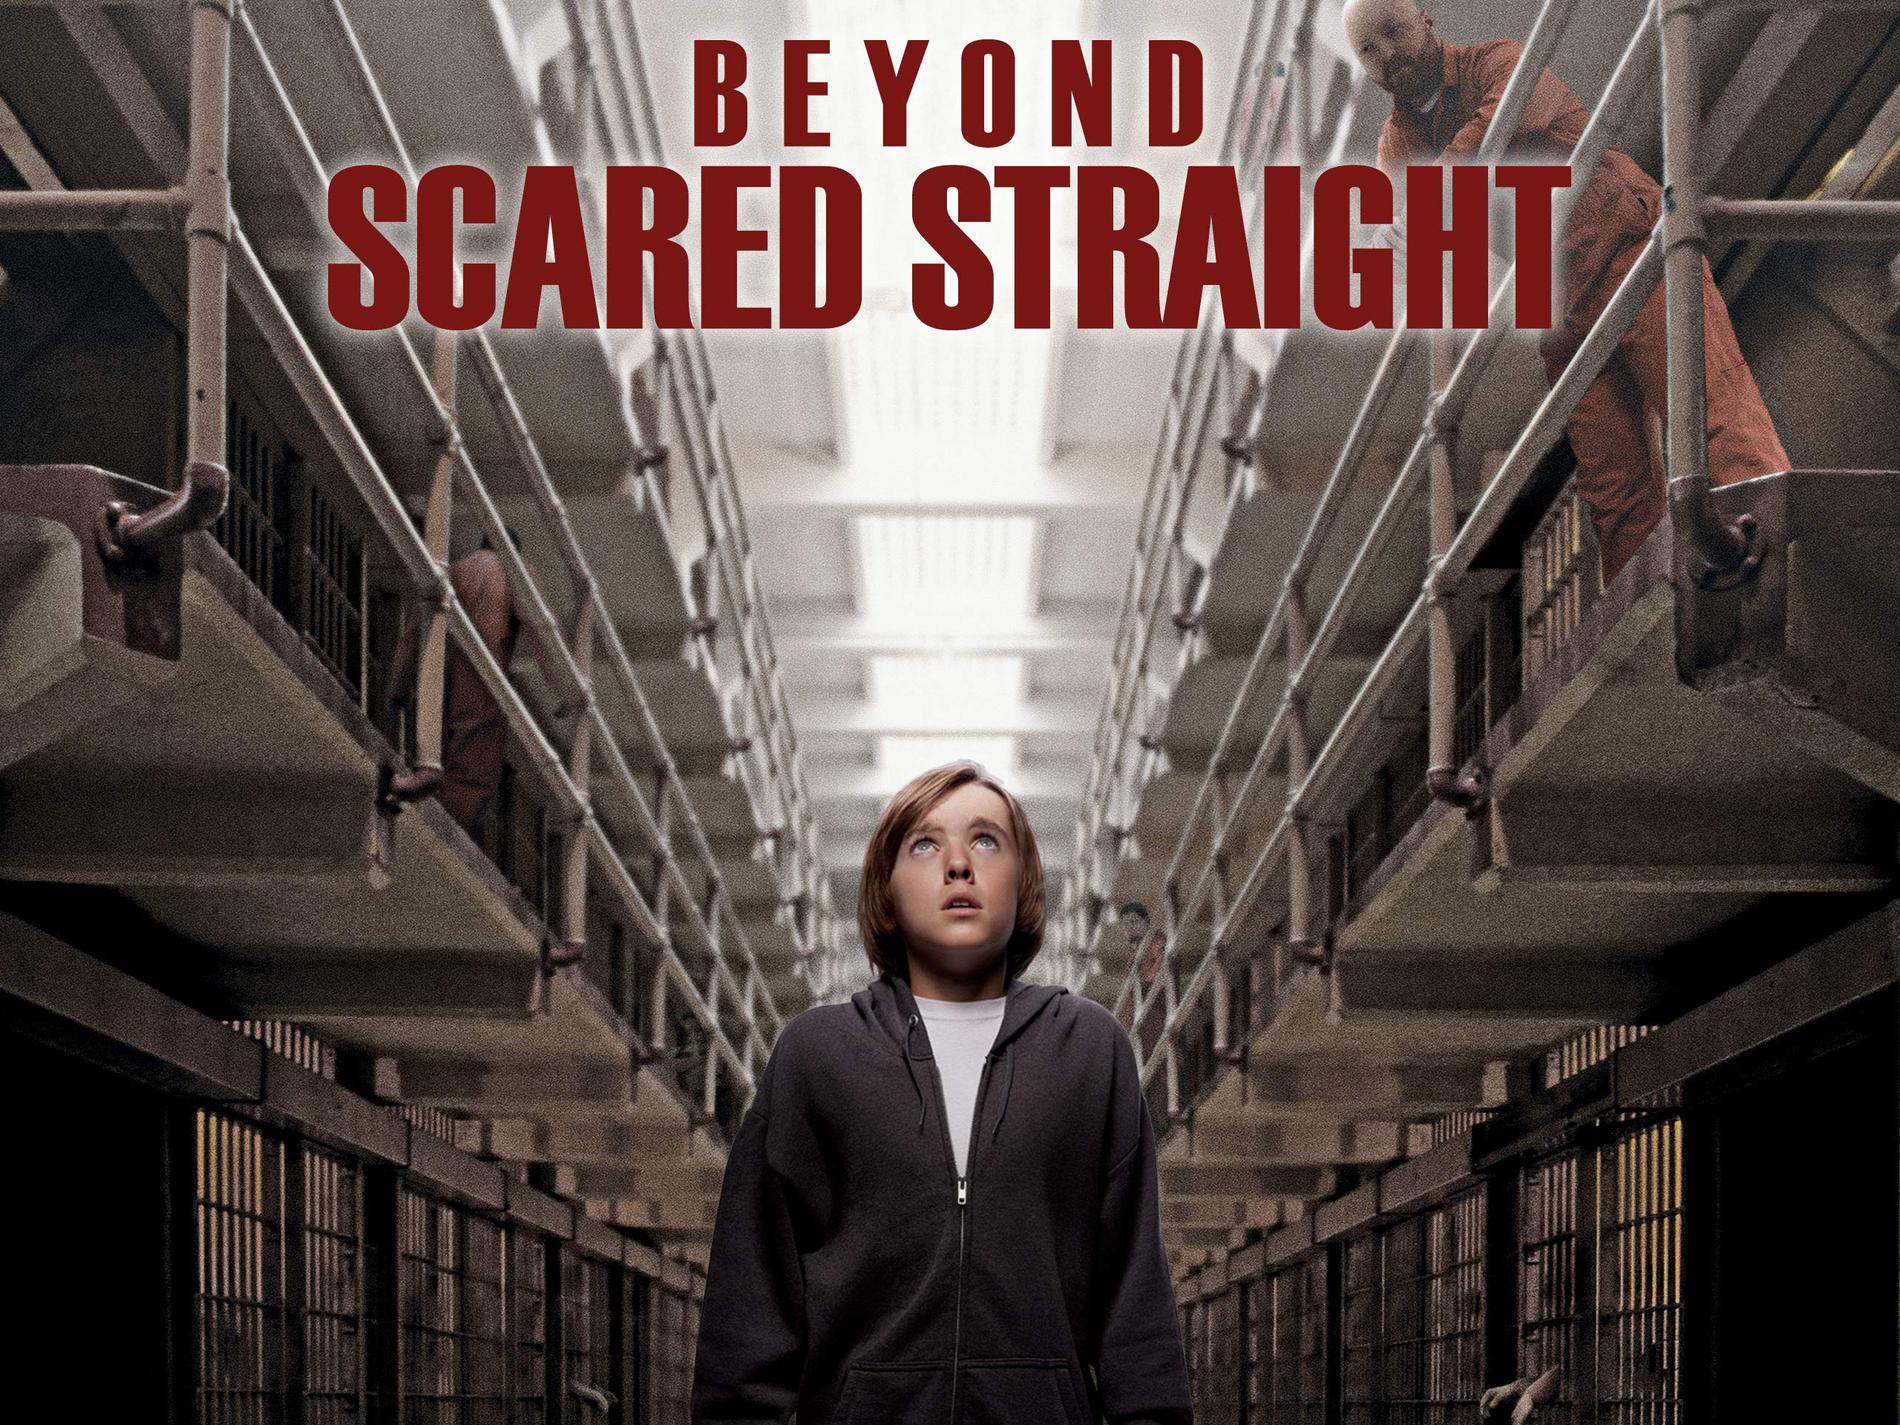 Tropez syntes i ”Beyond scared straight” 2011.